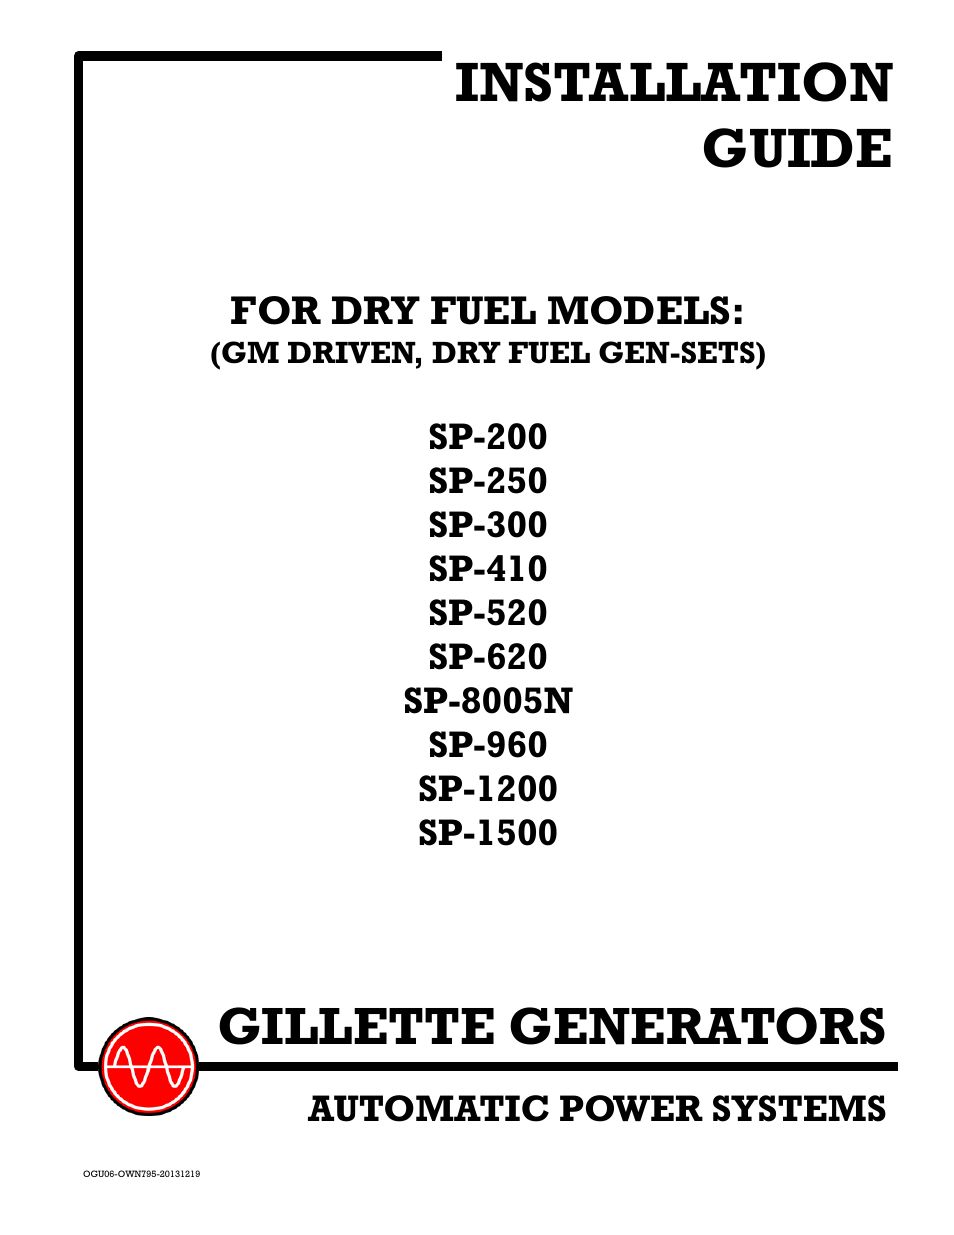 Gillette Generators SP-1500 User Manual | 30 pages